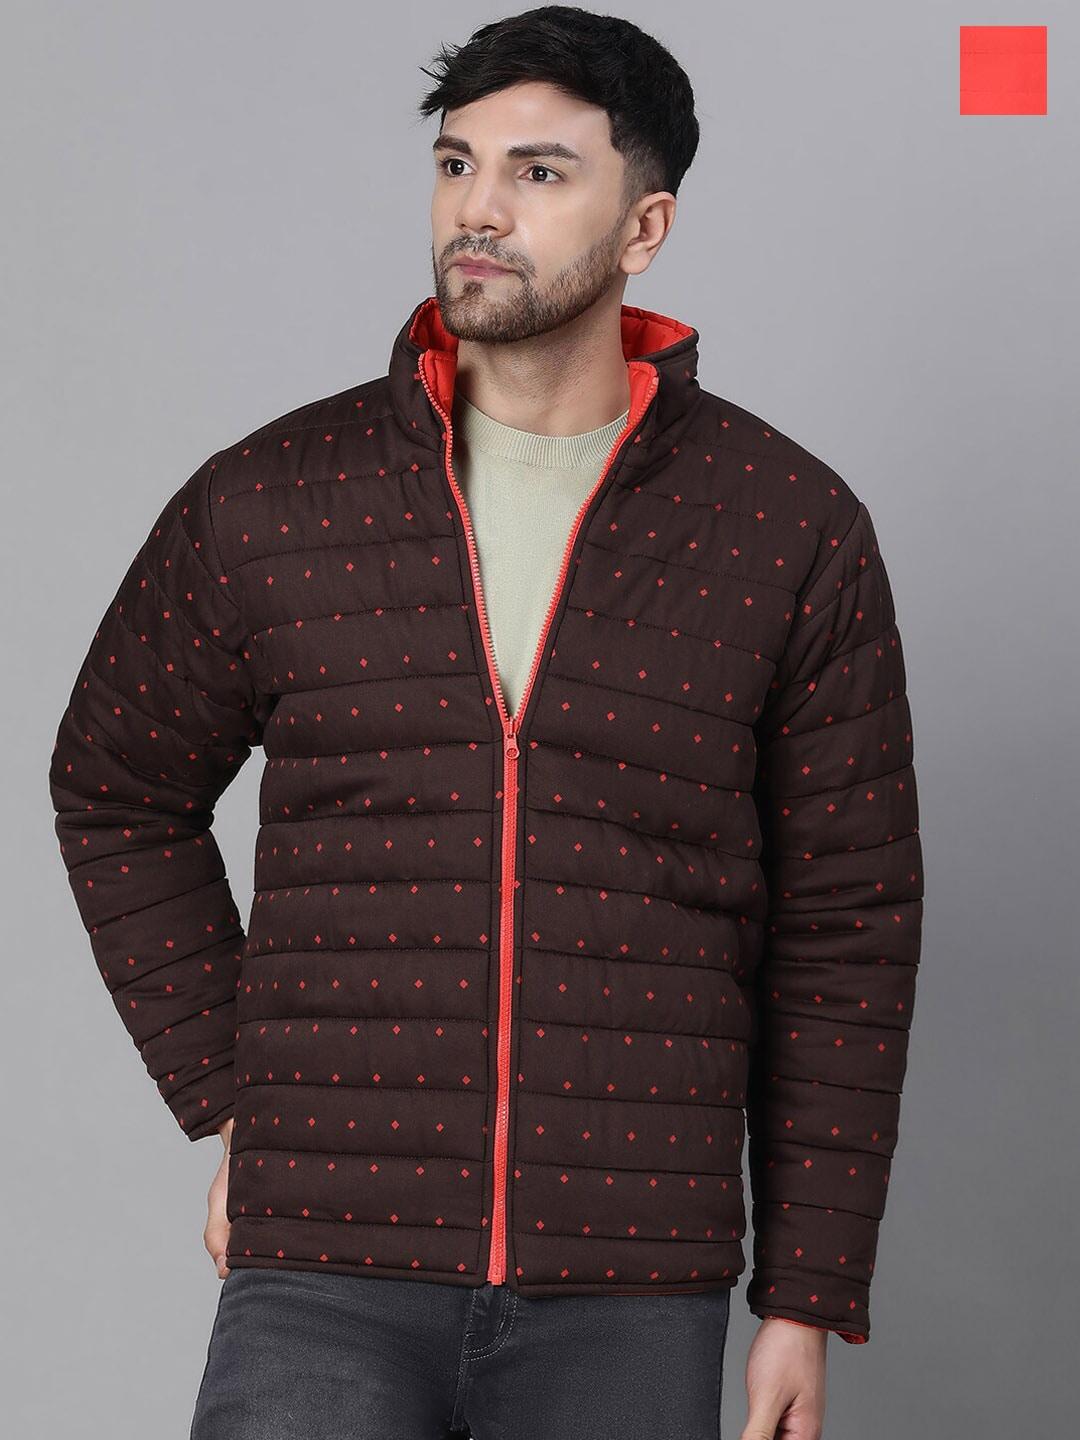 oxolloxo-polka-dot-printed-long-sleeves-reversible-cycling-puffer-jacket